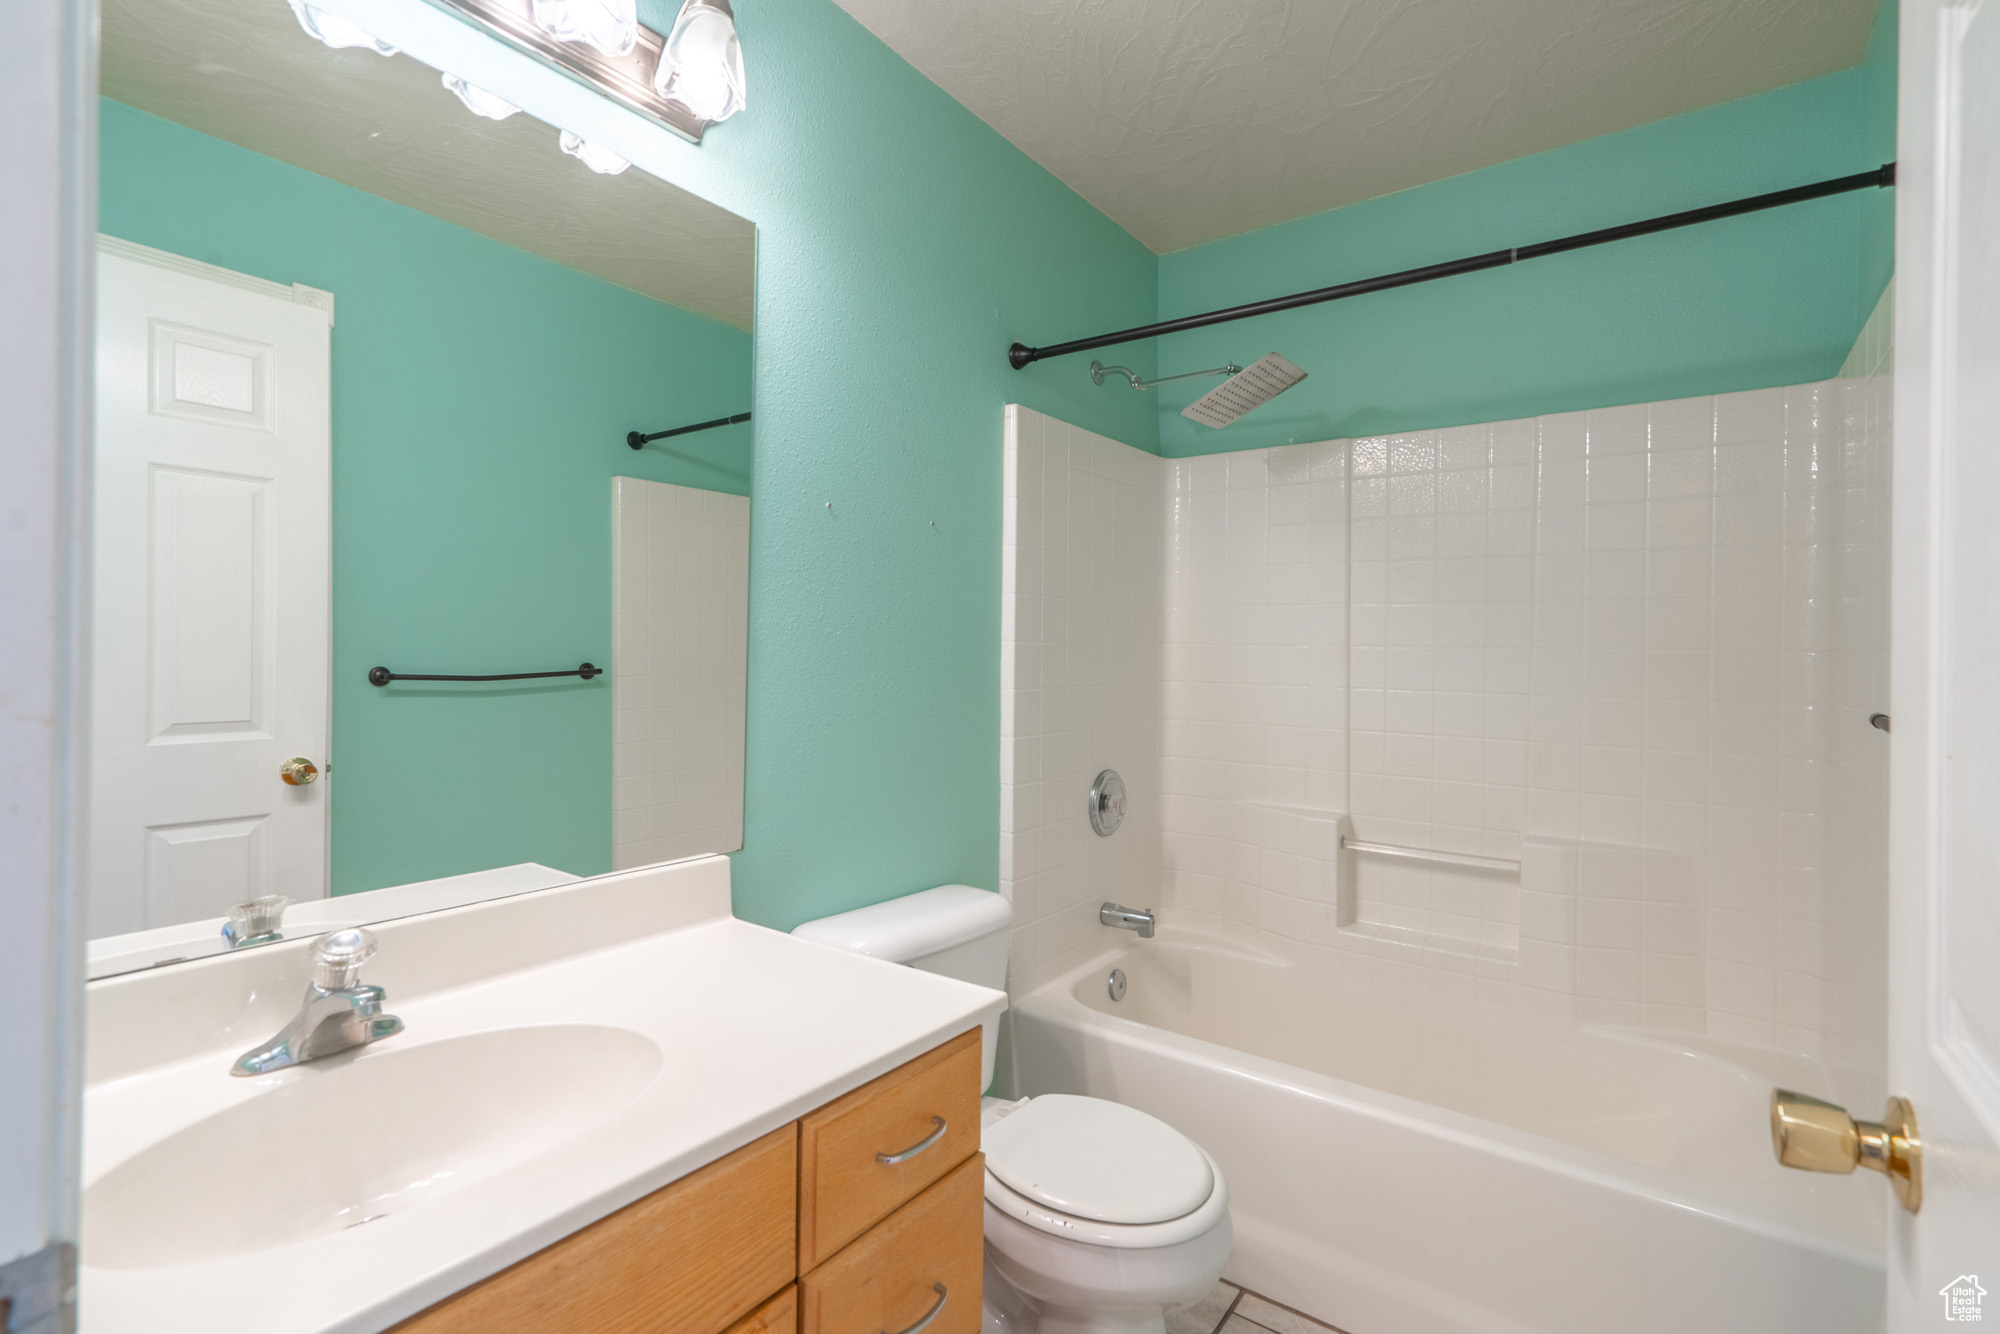 Full bathroom featuring tub / shower combination, tile floors, toilet, and vanity